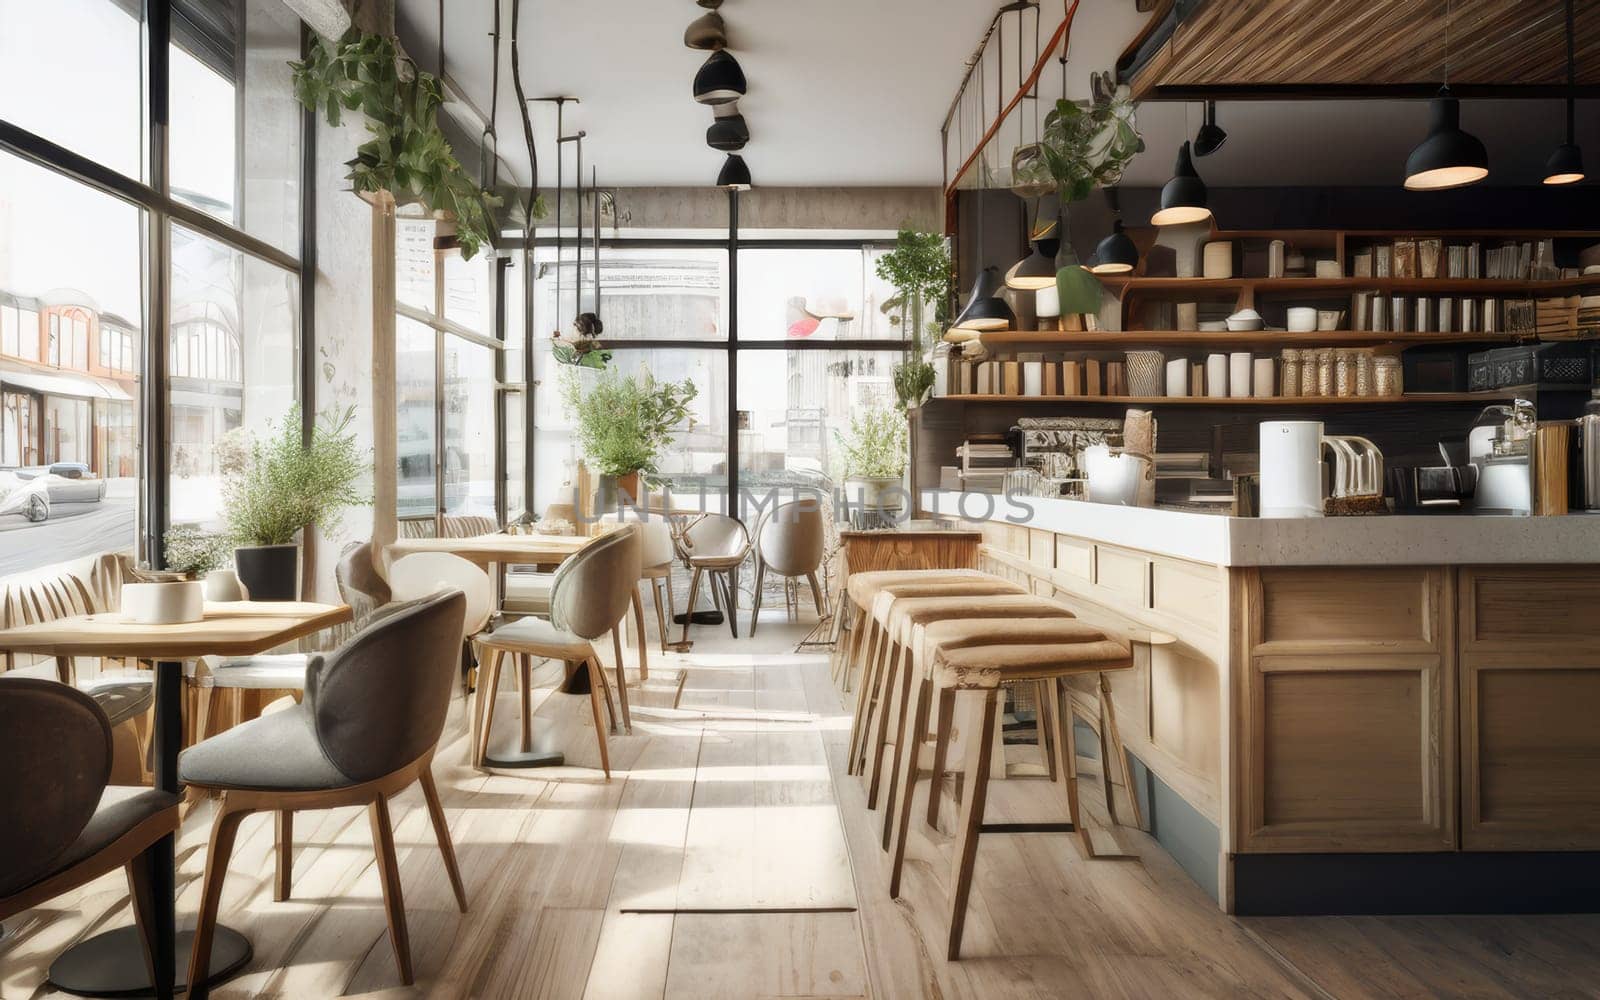 Cozy modern cafe interior design by fascinadora